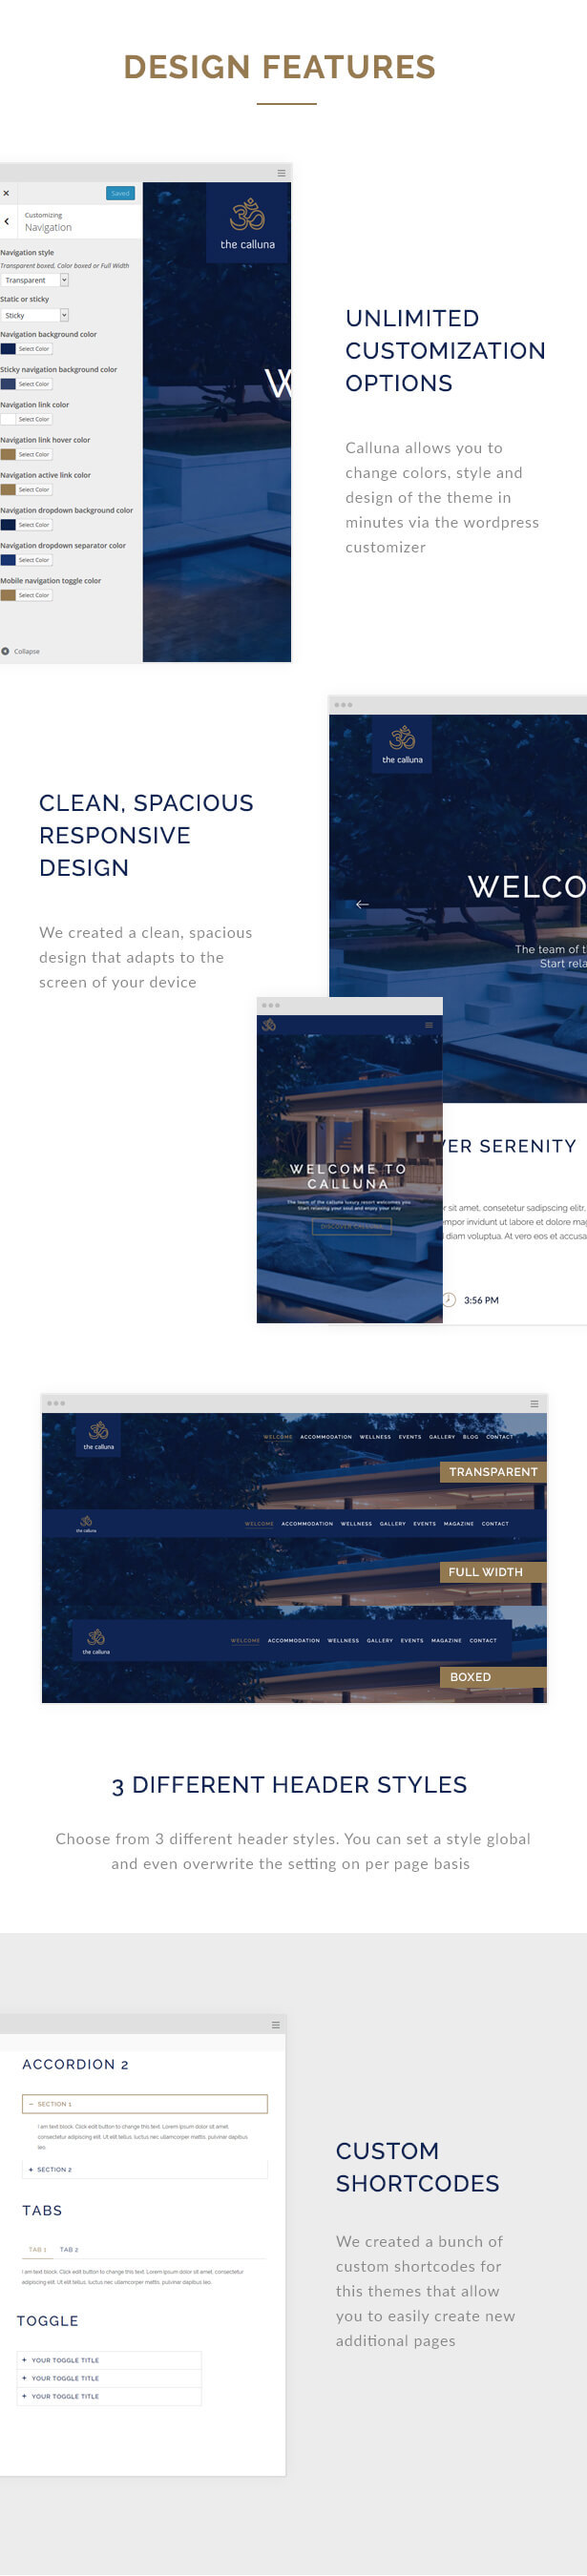 calluna description design - Calluna - Hotel WordPress Theme